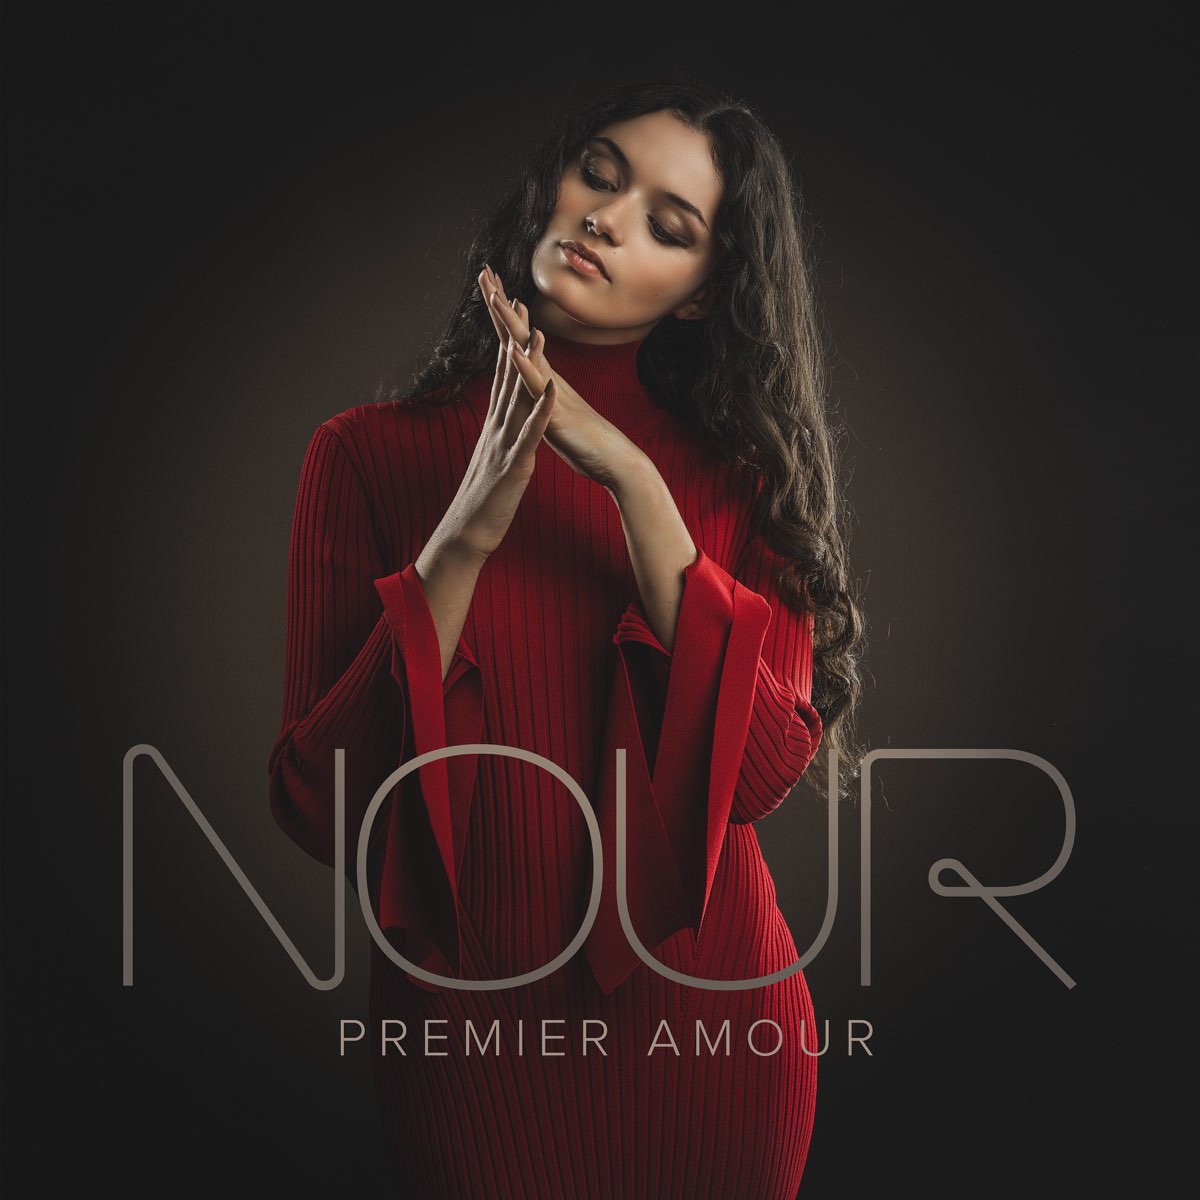 Nicole hugo morgen. Nour певица. Premier amour. Tourgueniev "Premier amour". Premier amour (2002).